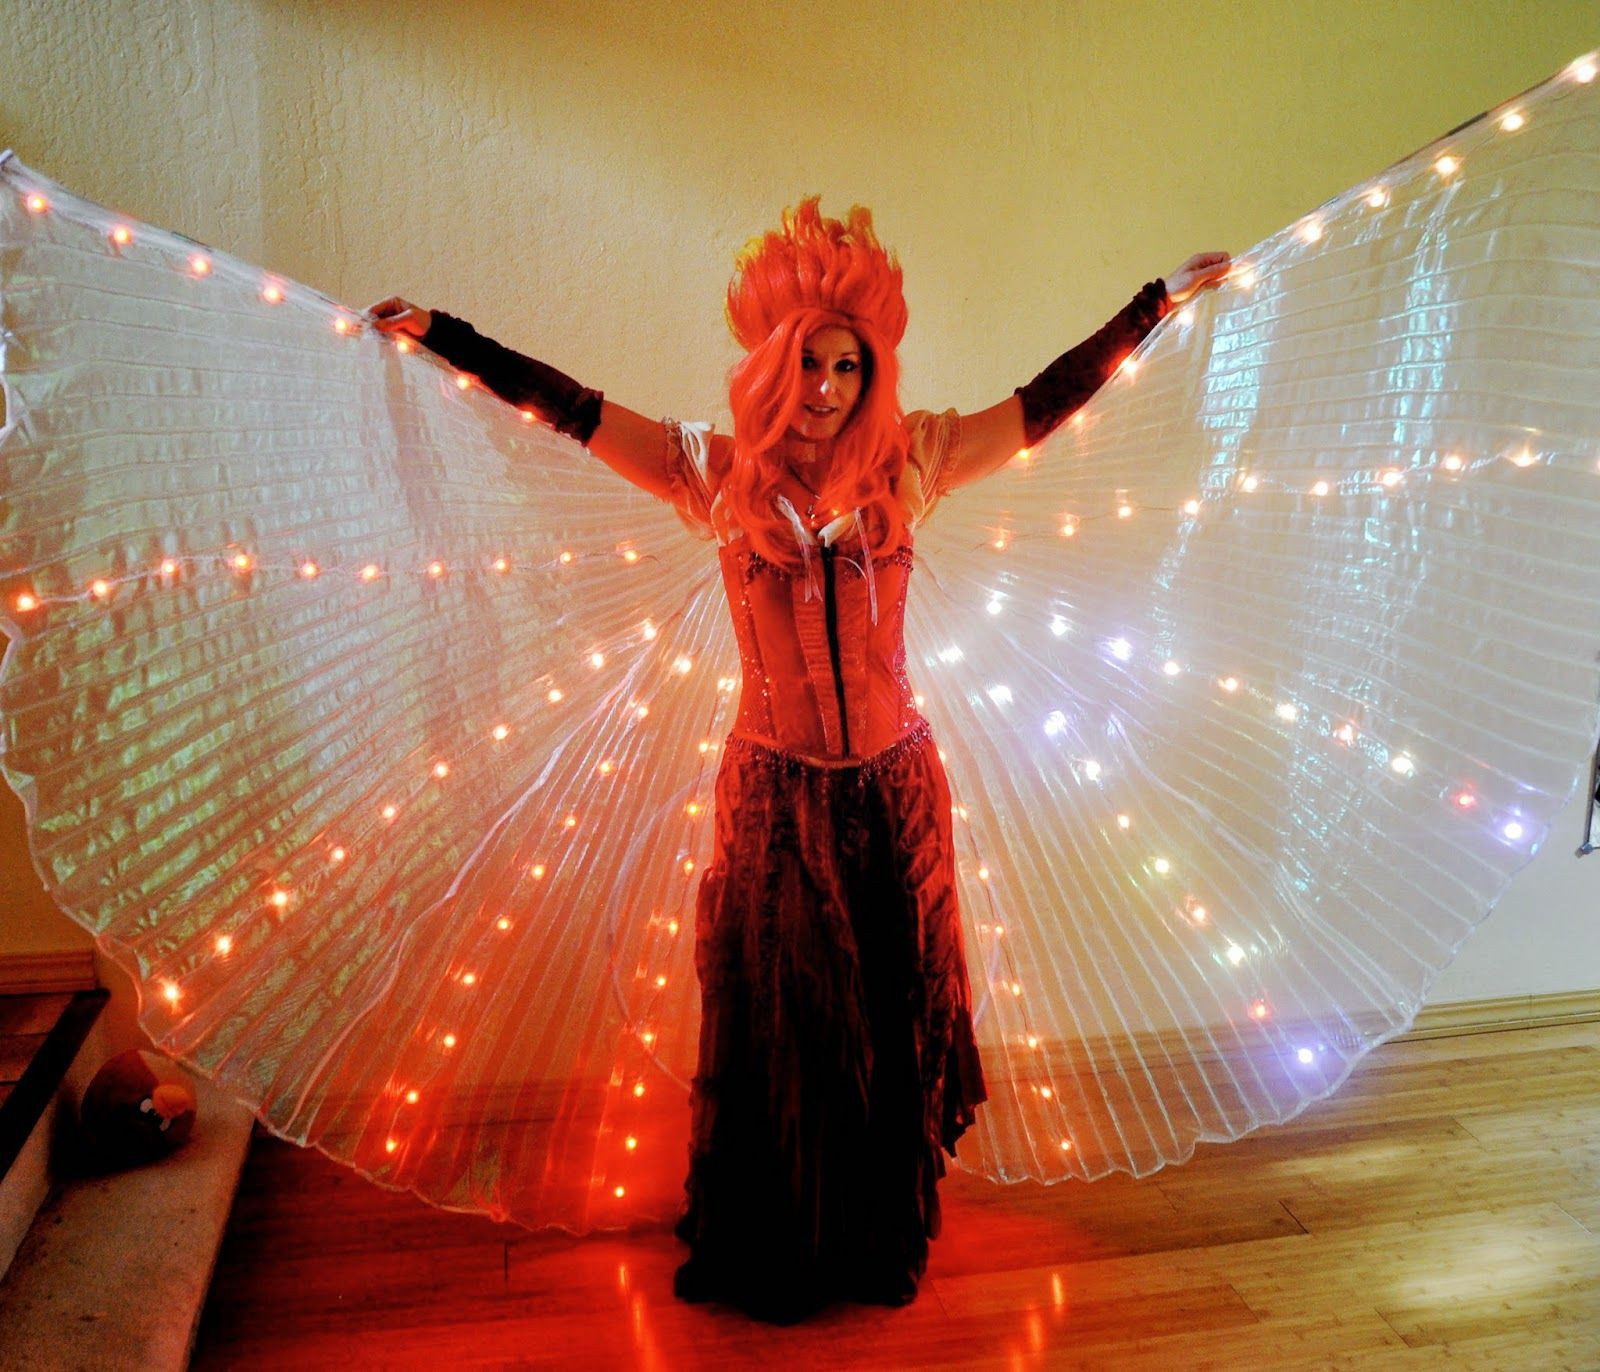 Led Costume DIY
 DIY Fire Pixie Fashion LED Isis Wings Arduino